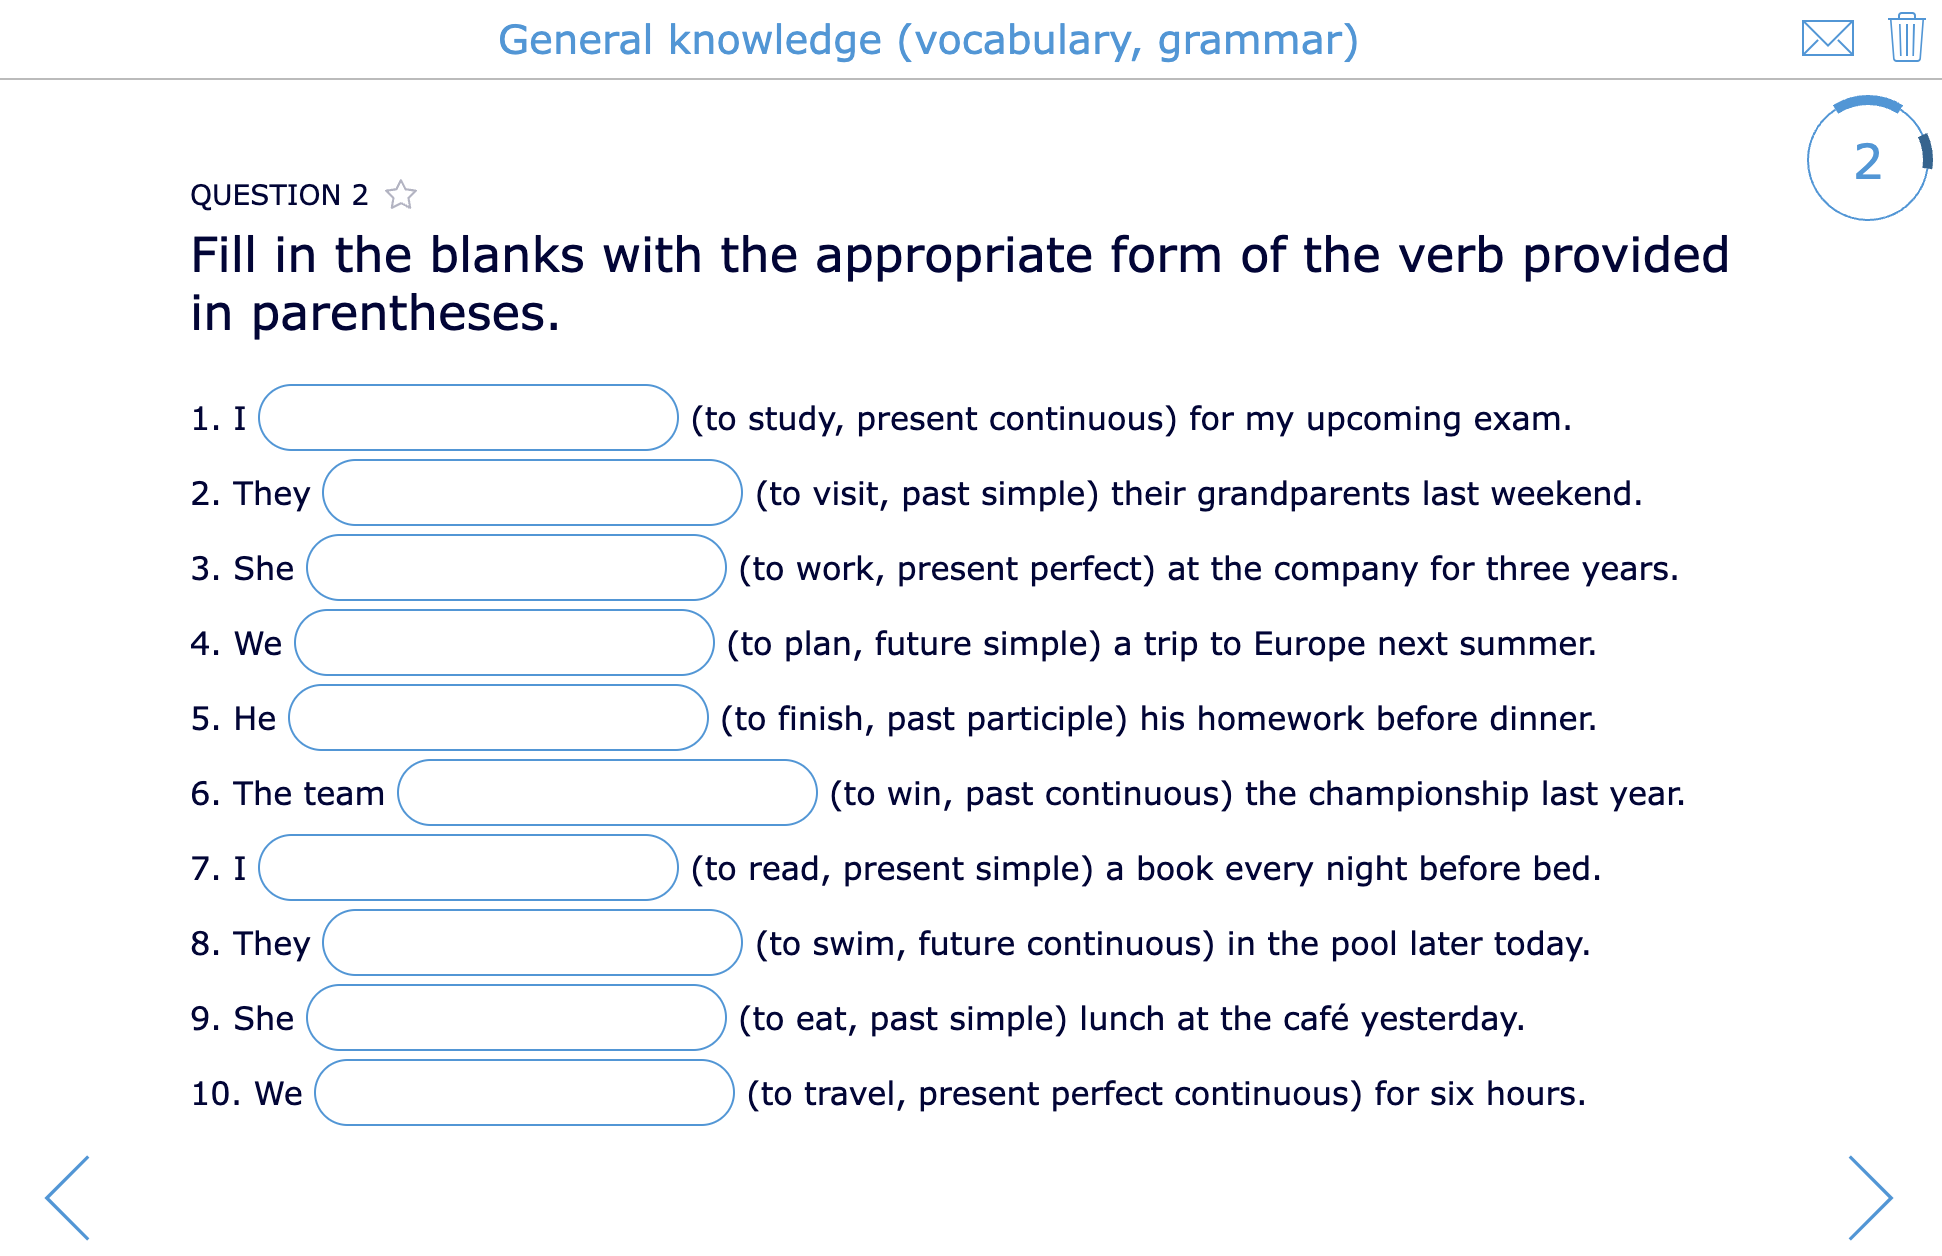 Diagnostic pre-assessment test grammar and vocabulary ELL BookWidgets